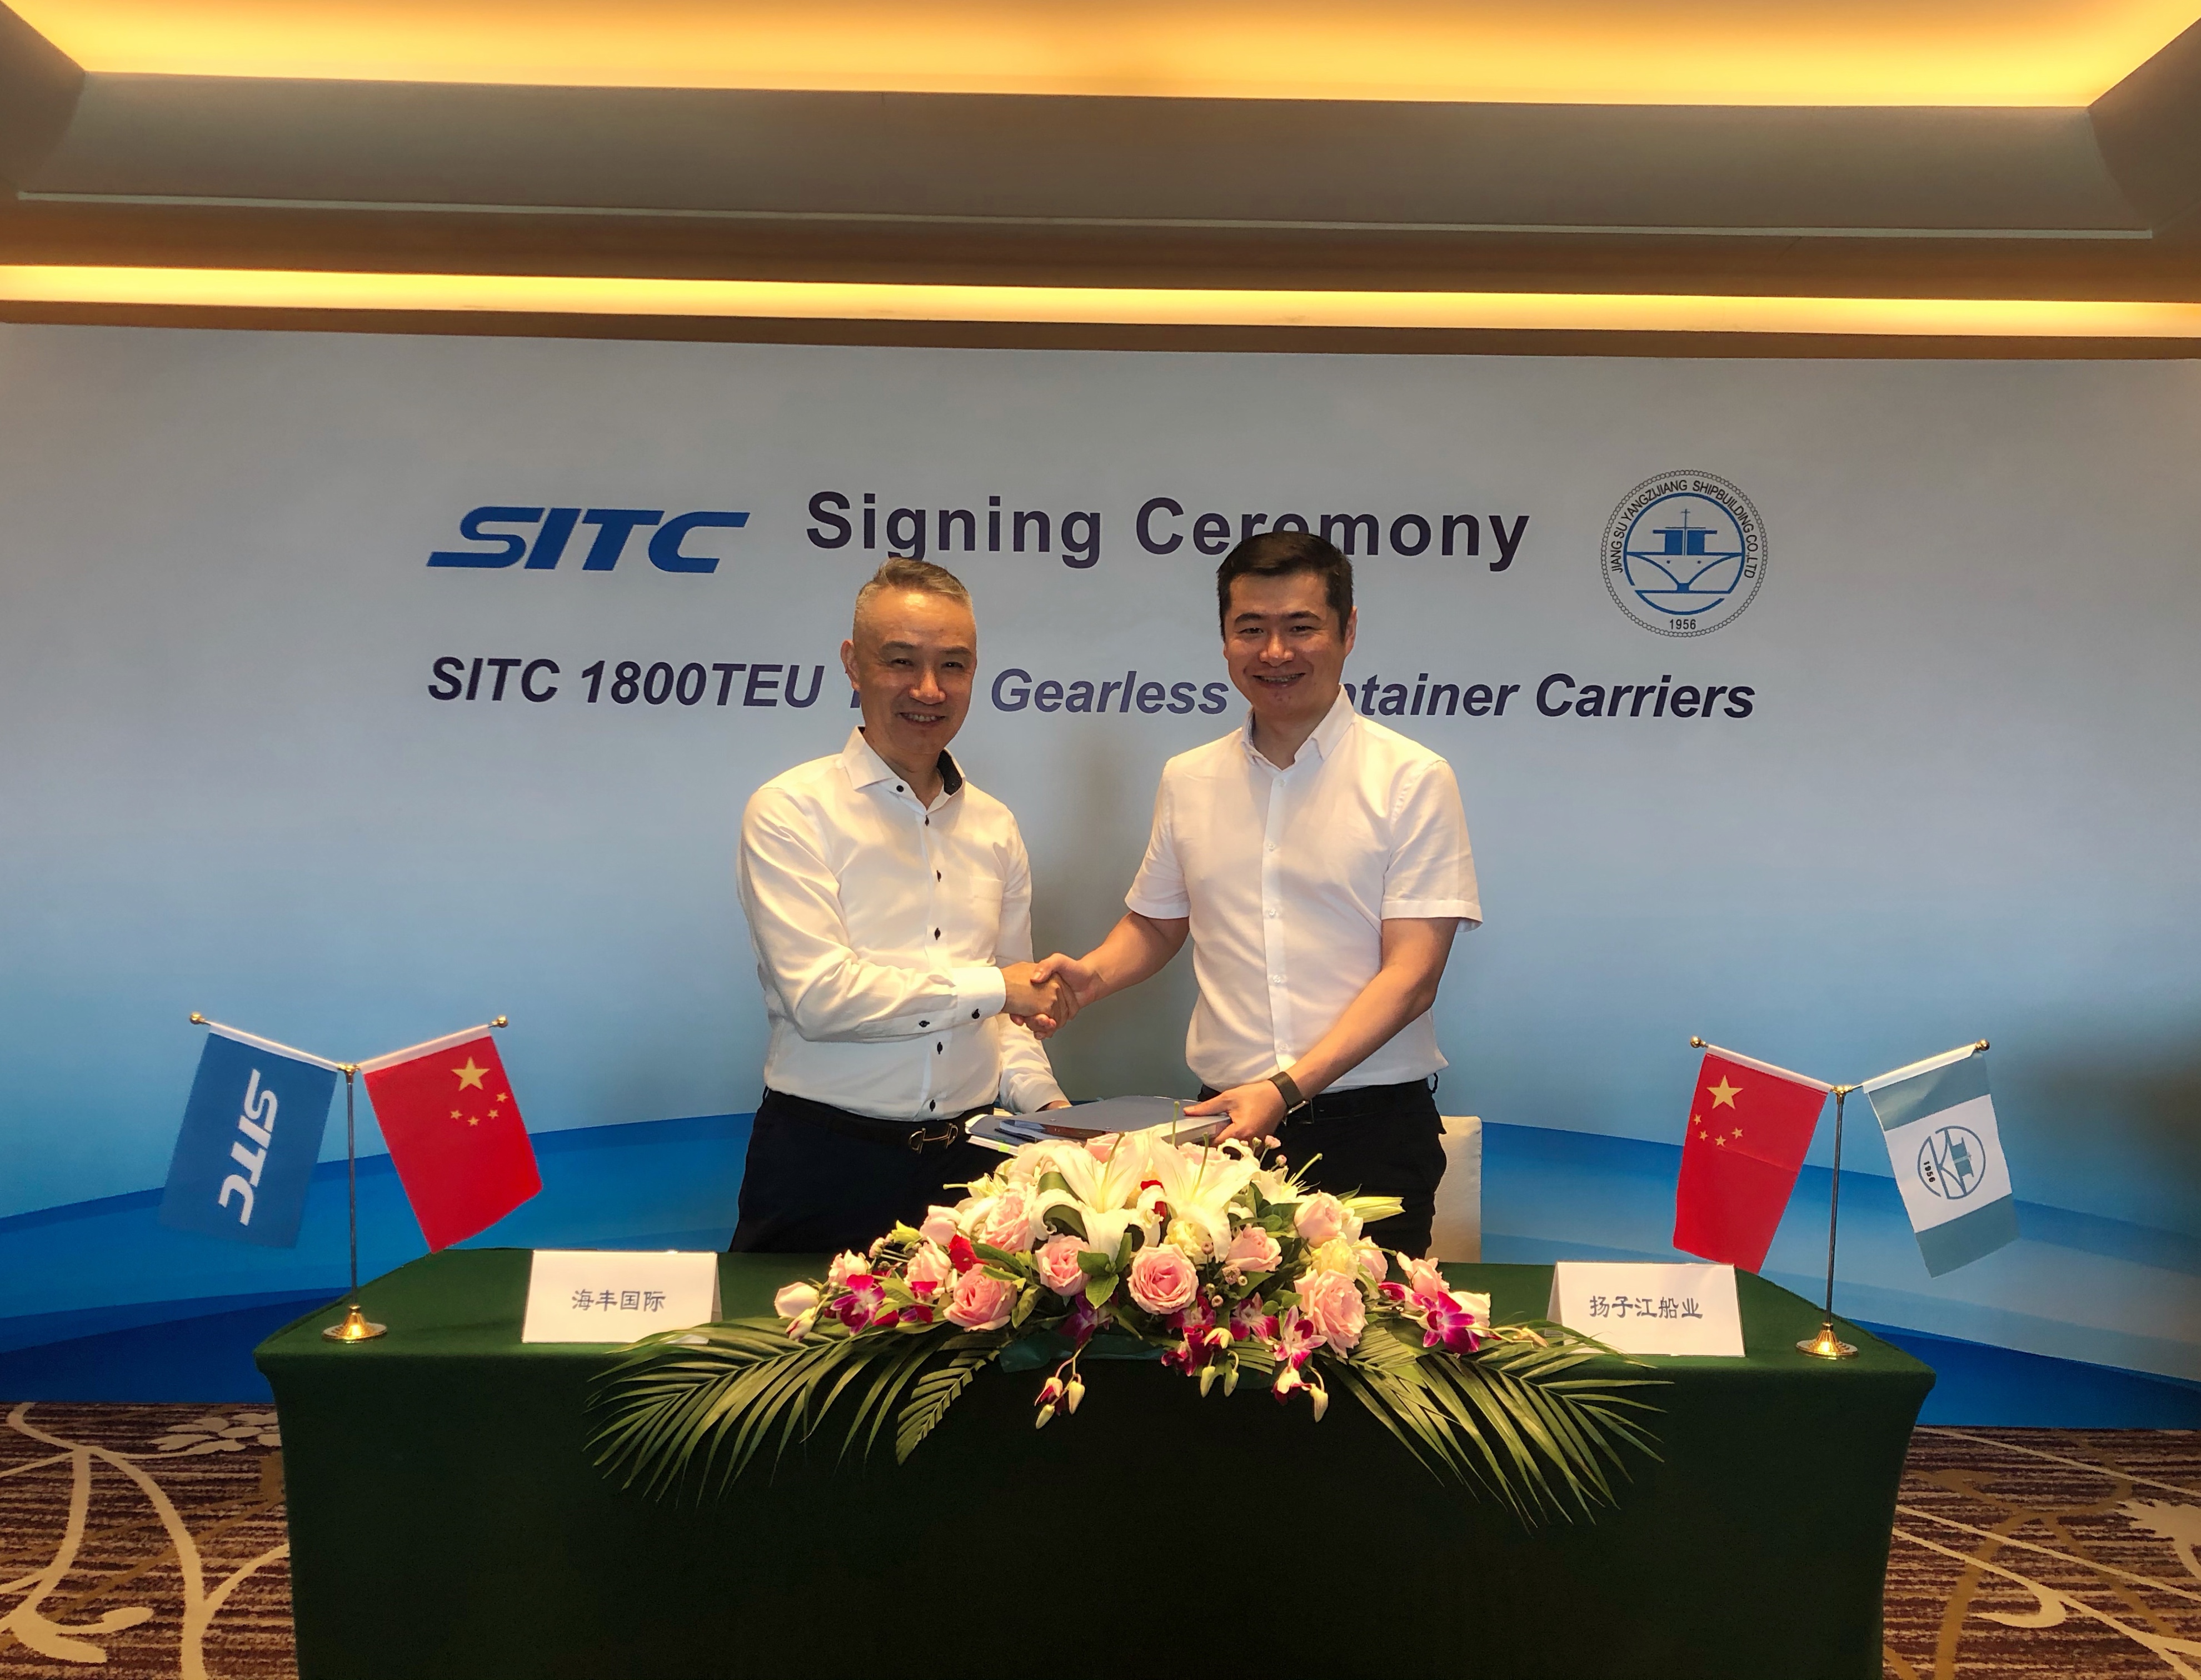 SITC International Deepened Cooperation with Yangzijiang Shipbuilding Group